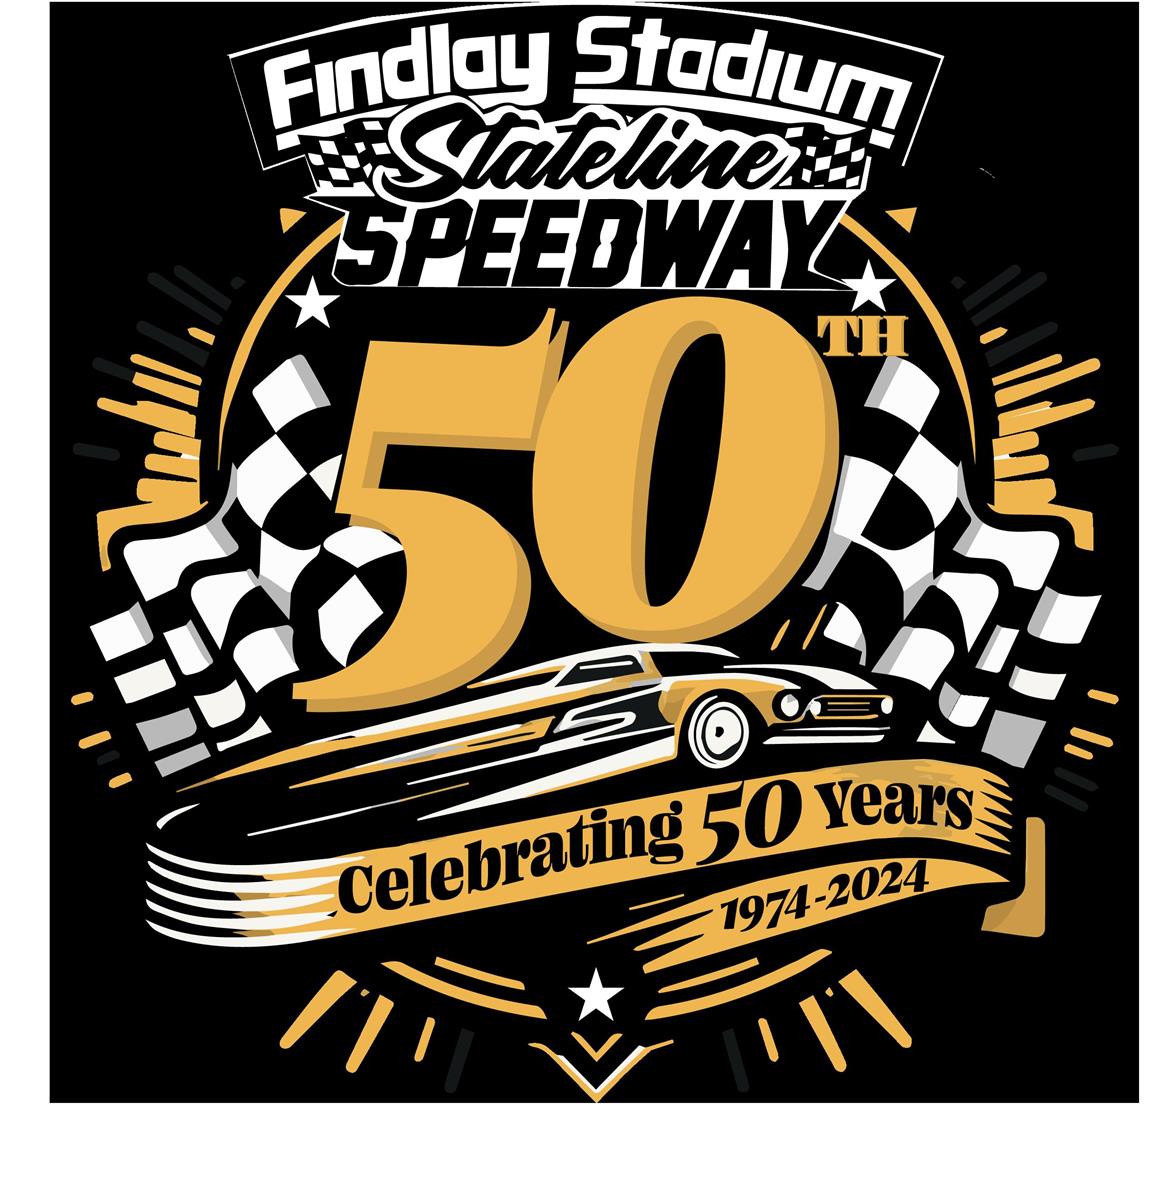 50 Years of Racing